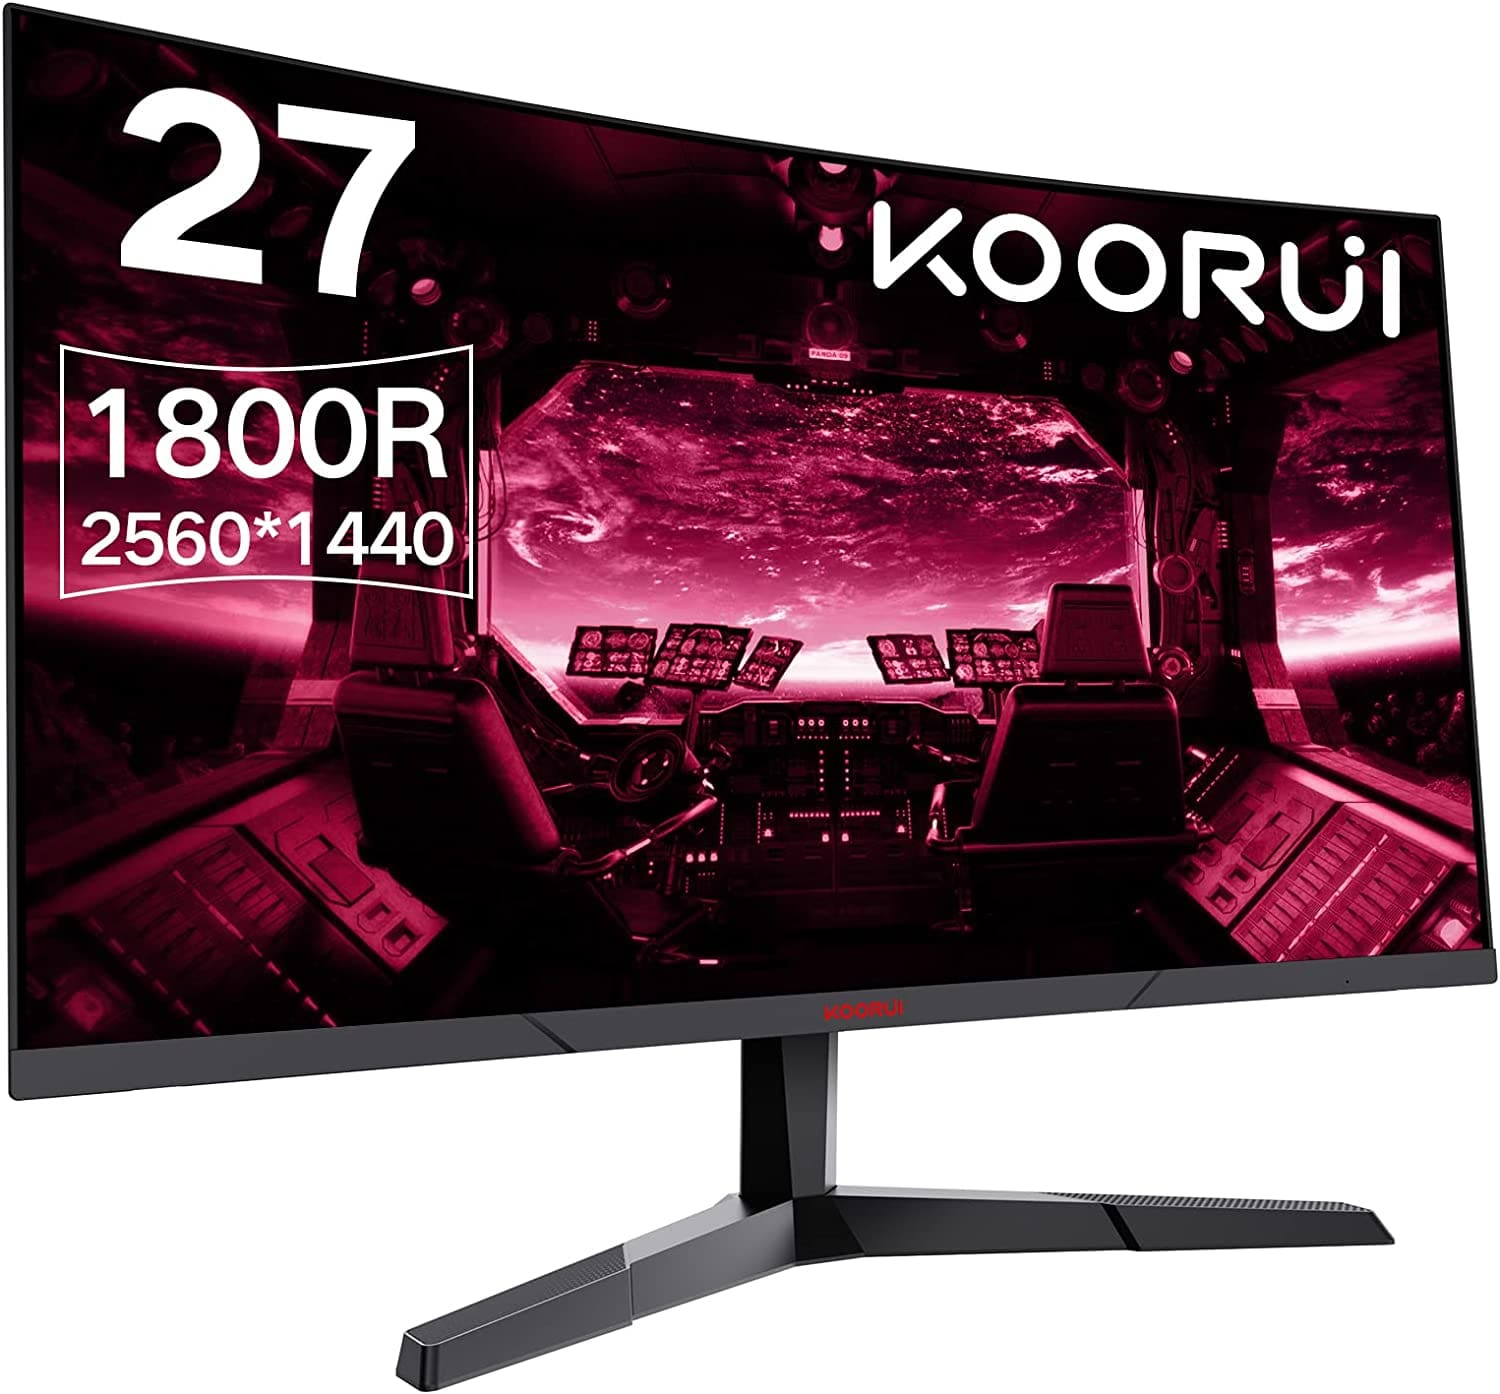 KOORUI 27-Inch Computer QHD 2560P Monitor